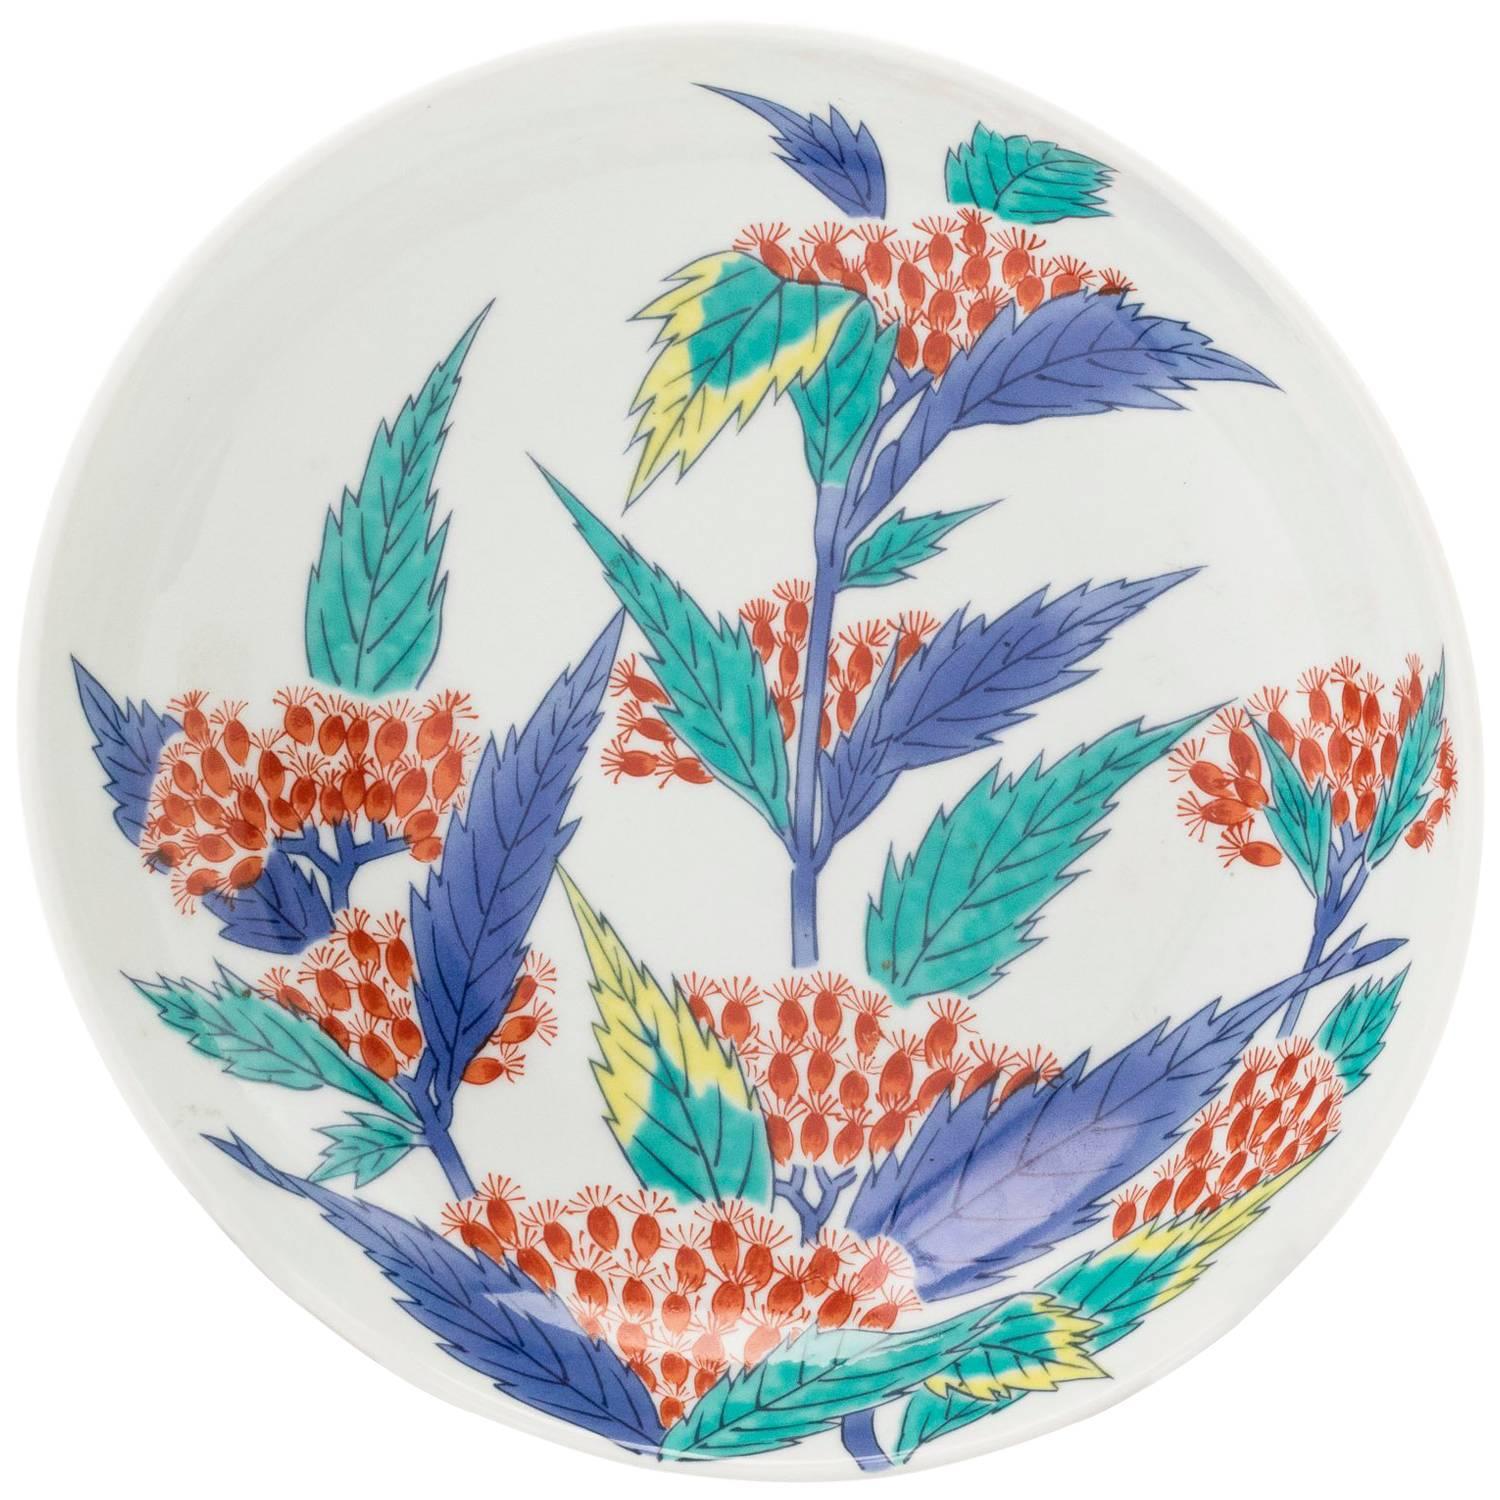 Vintage Japanese Nabeshima Porcelain Plate with Floral Design, circa 1960